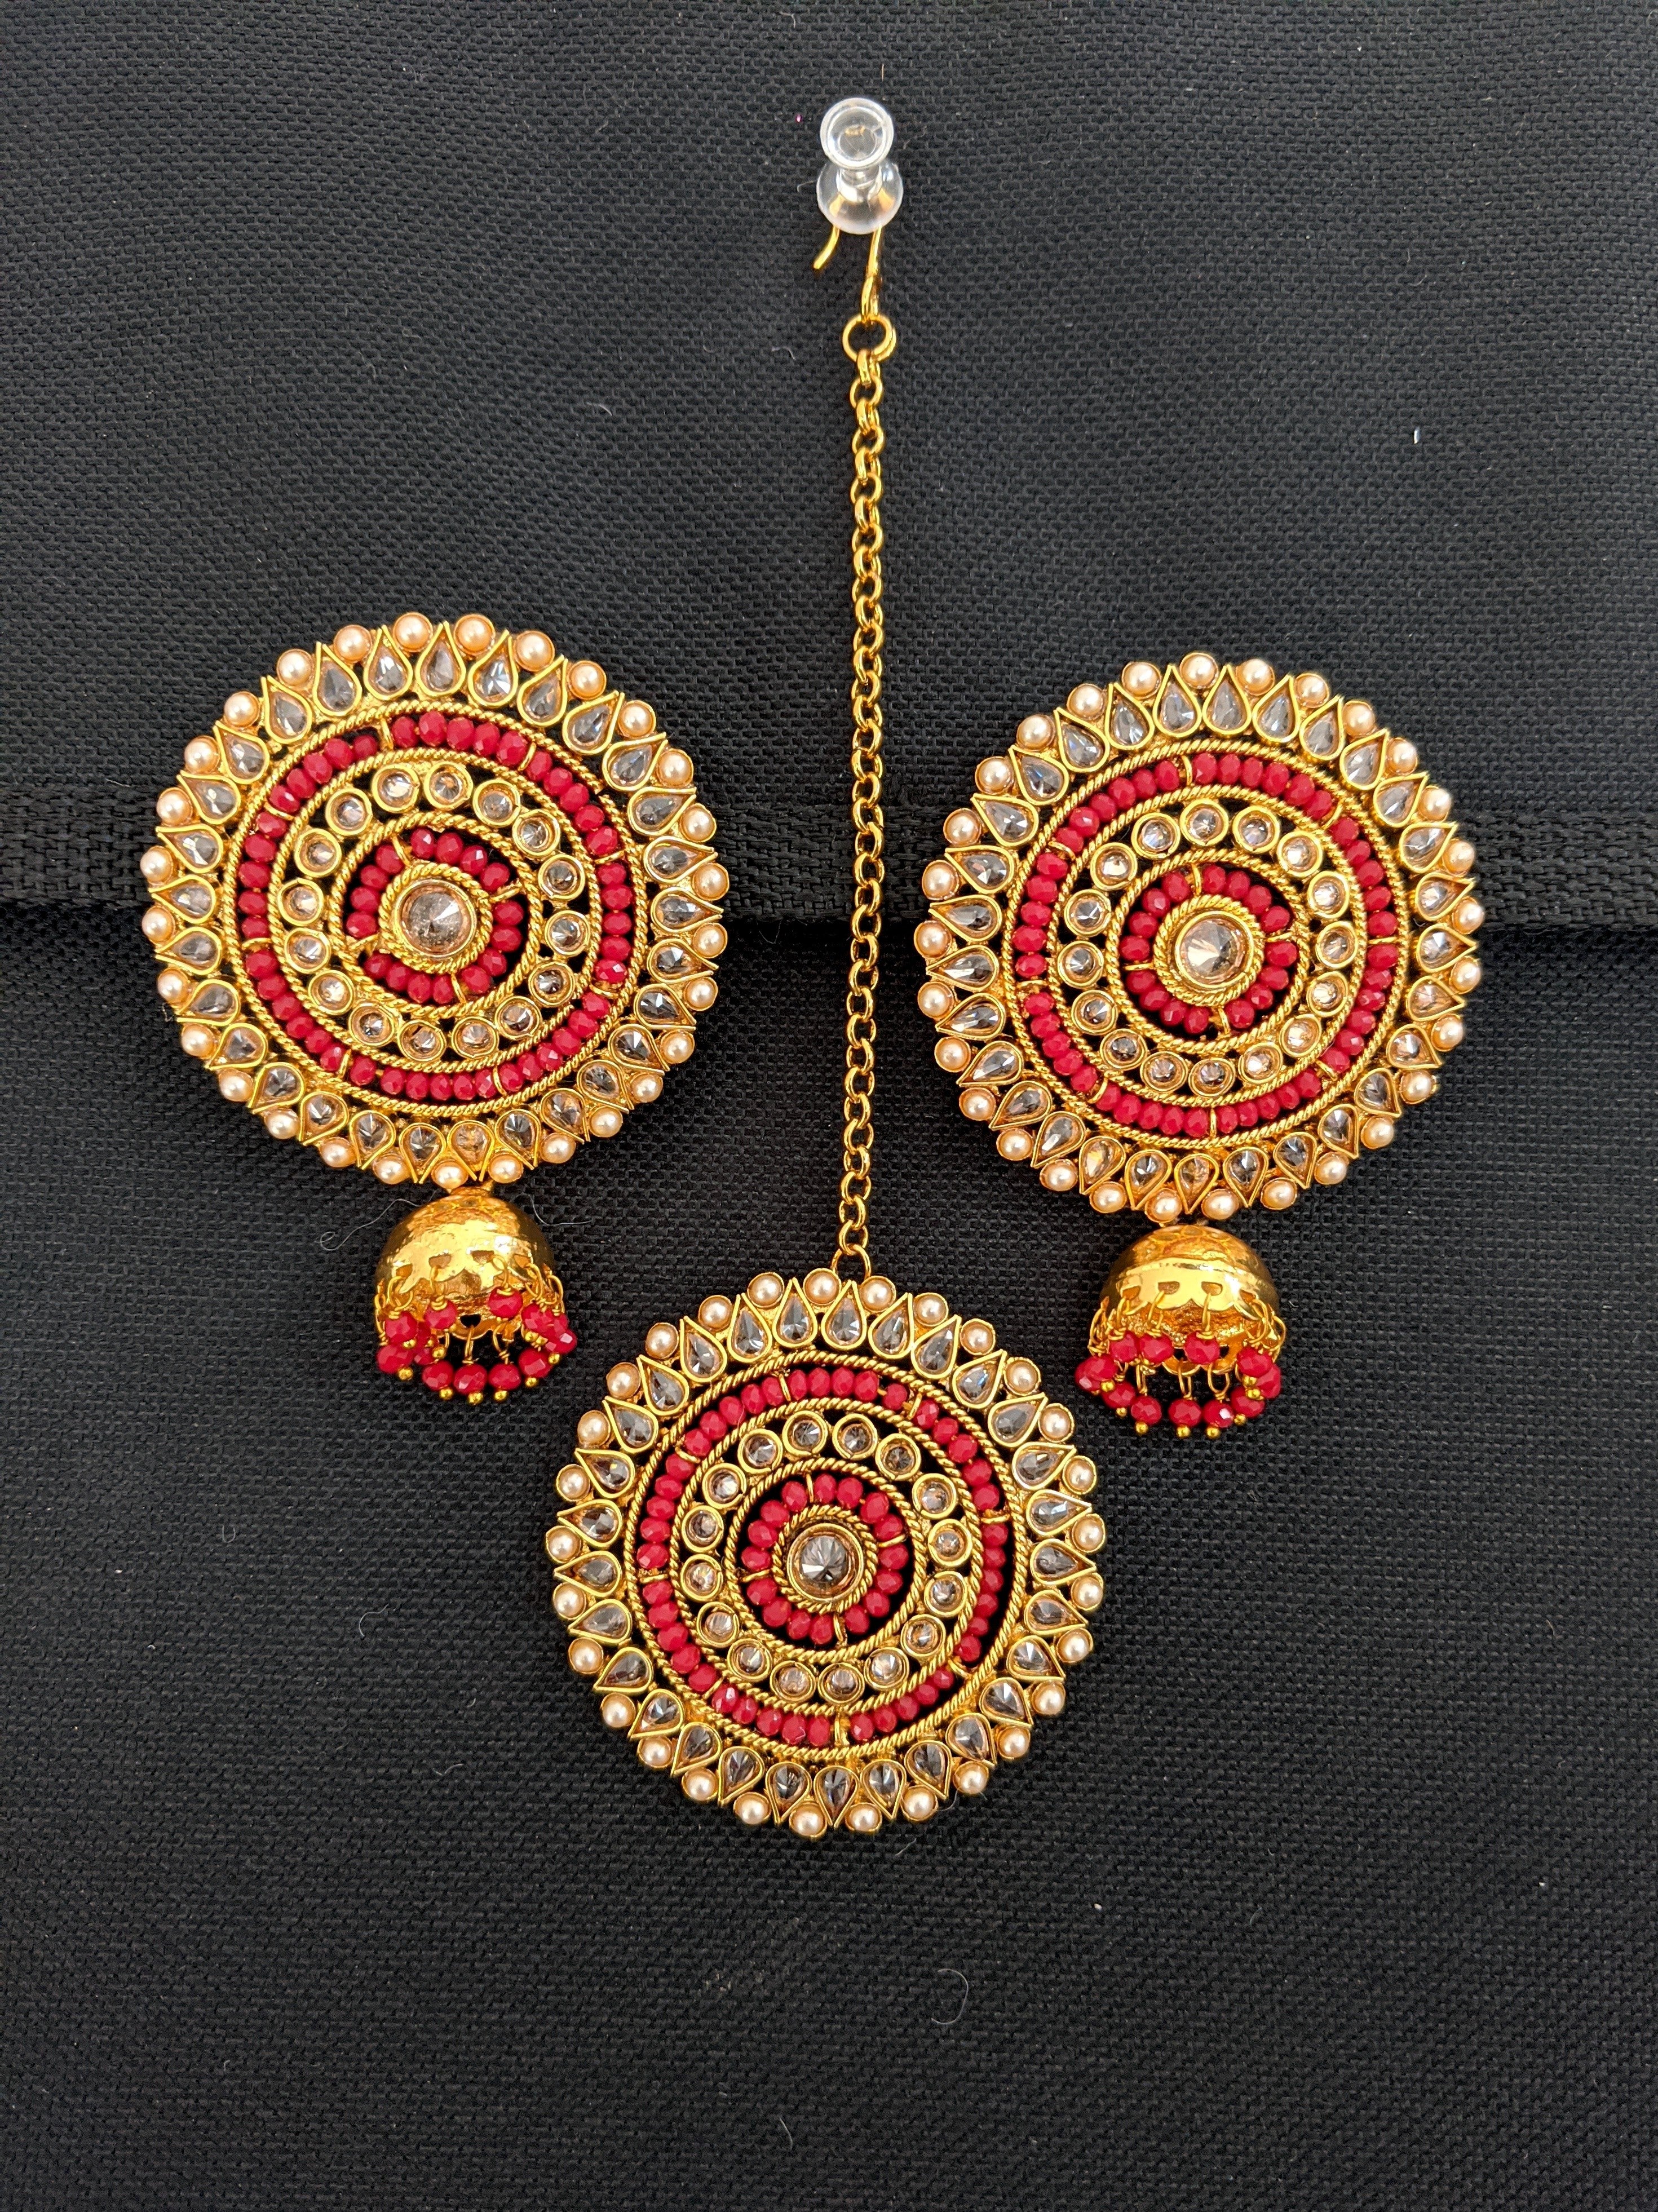 Exclusive Rhinestone Ethnic Jhumka Earrings w/ Chain - Gold or Silver  #37327 | Buy Jhumka Earrings Online